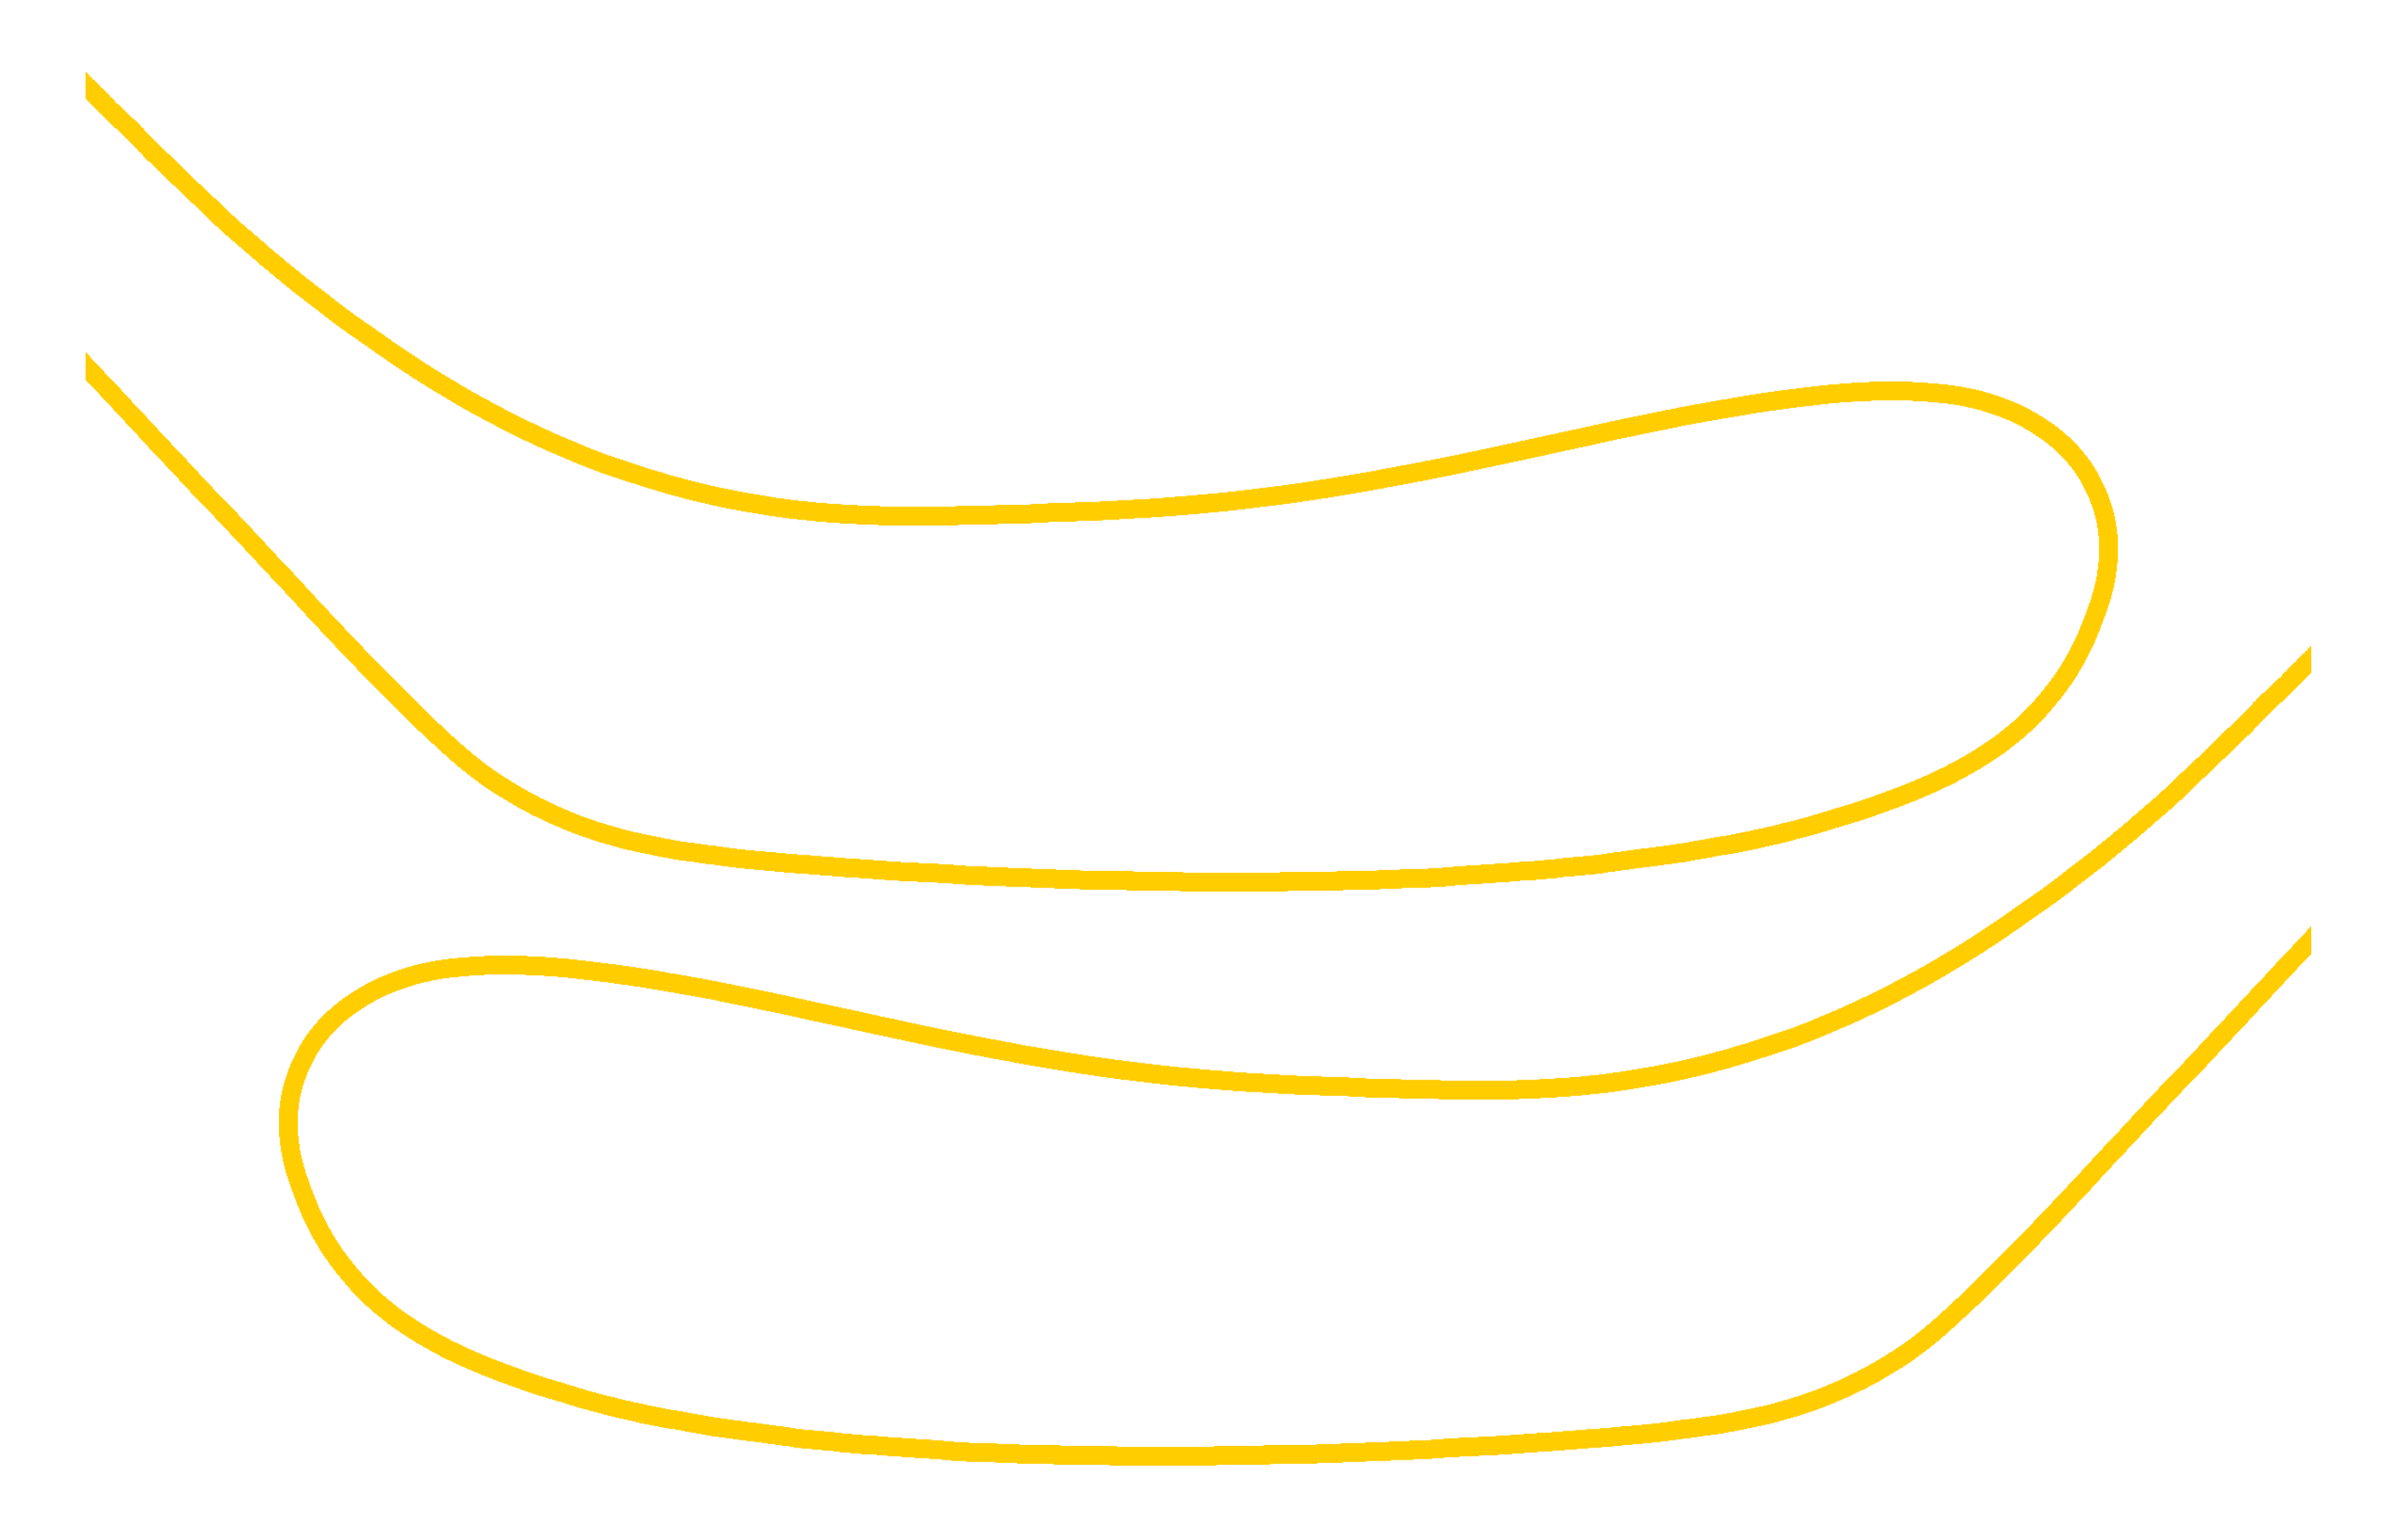 p28 curve profile view